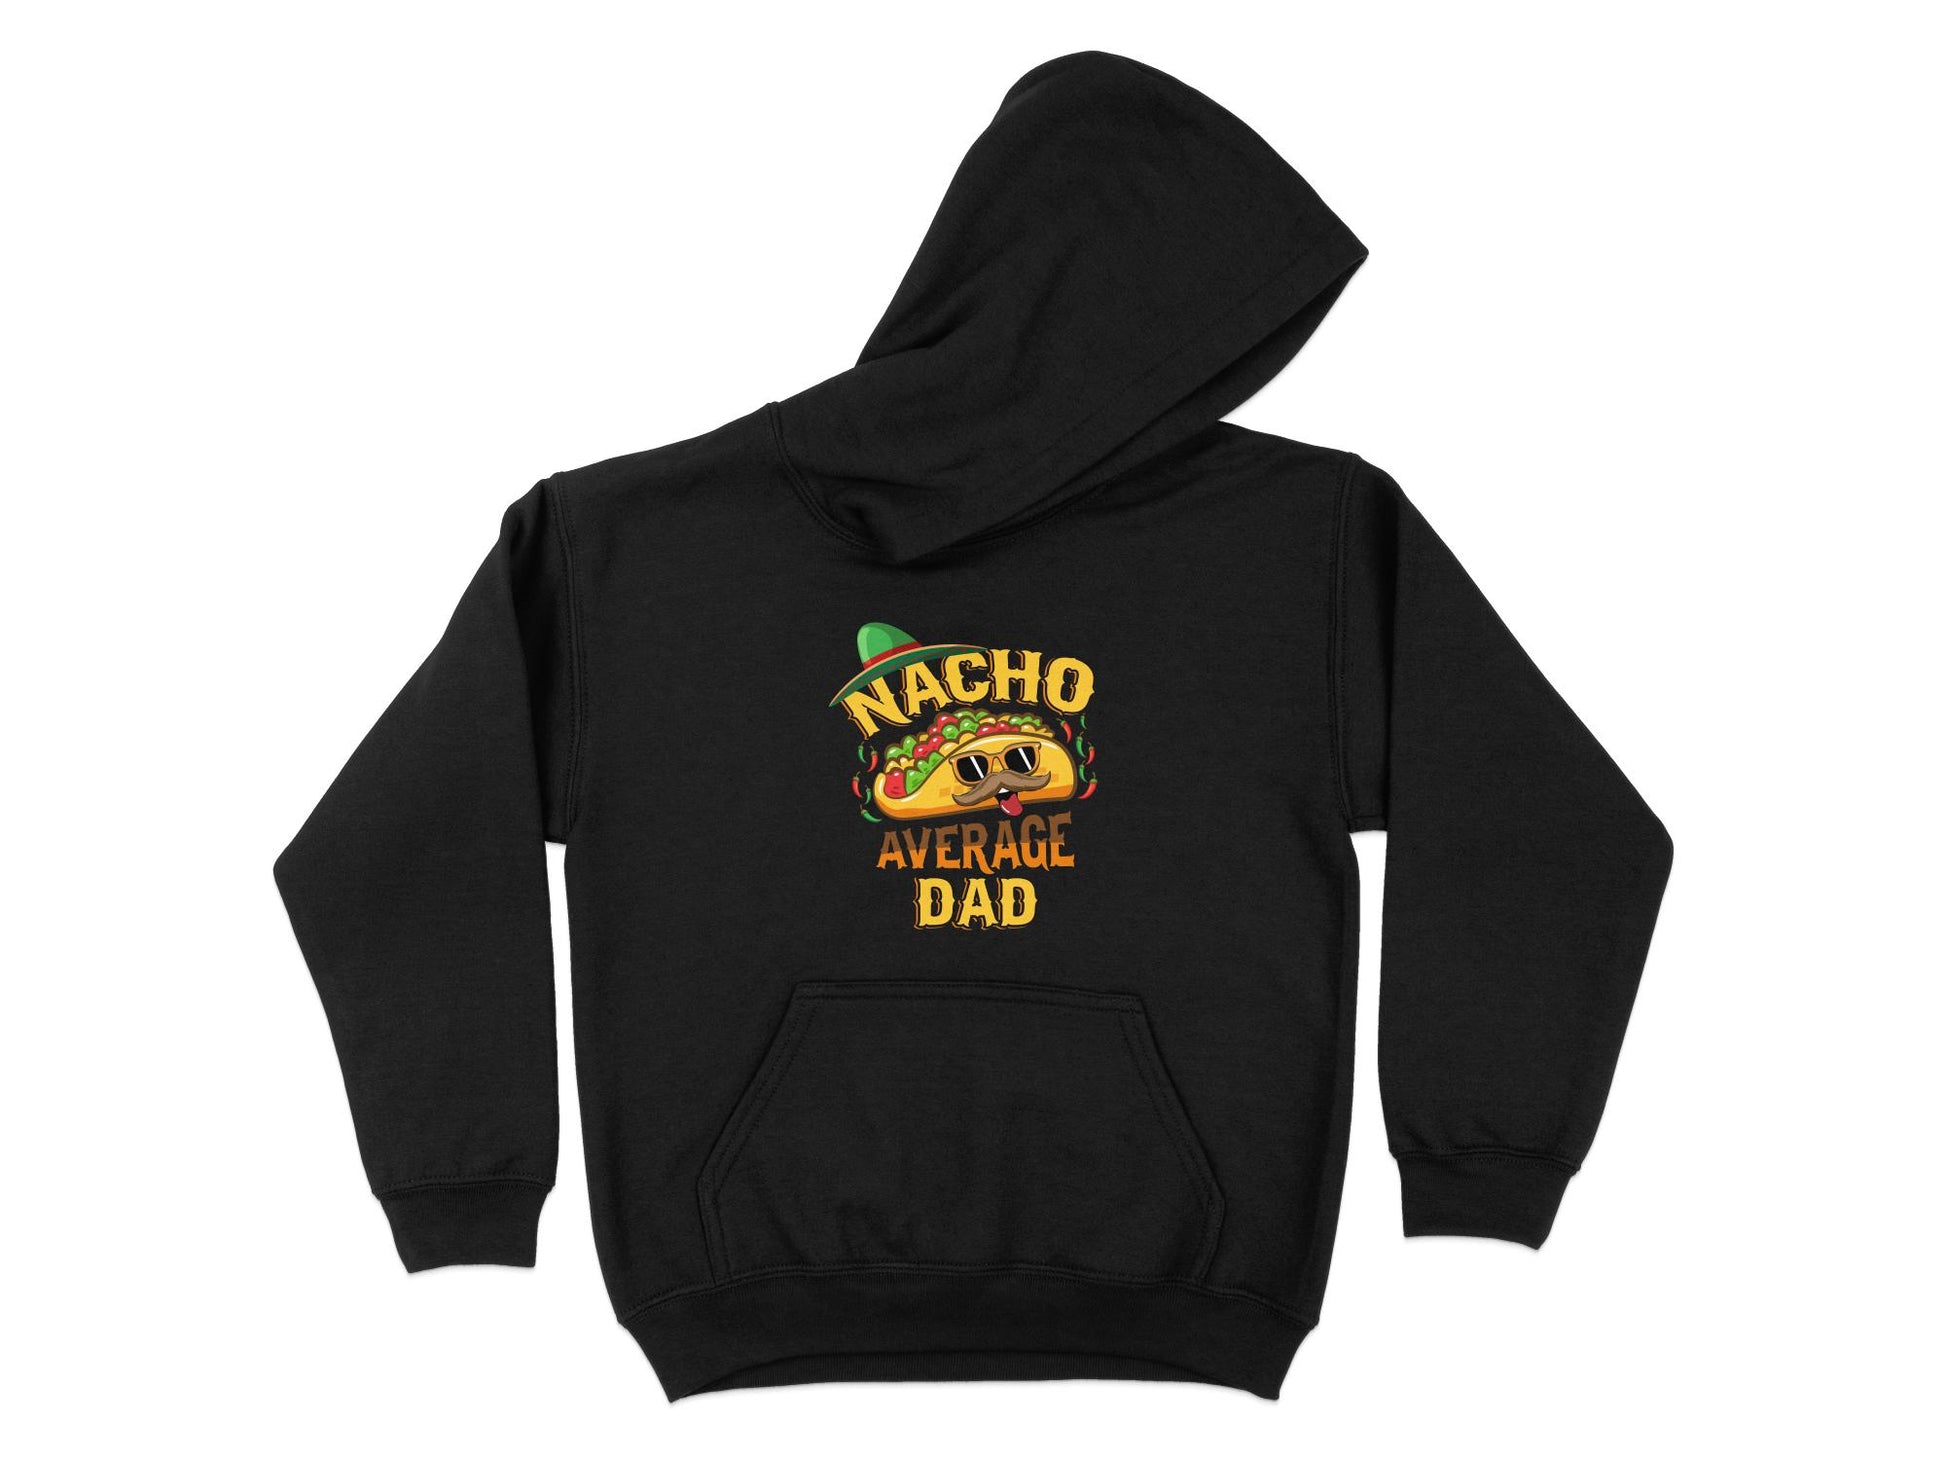 Nacho Average Dad Hoodie, black